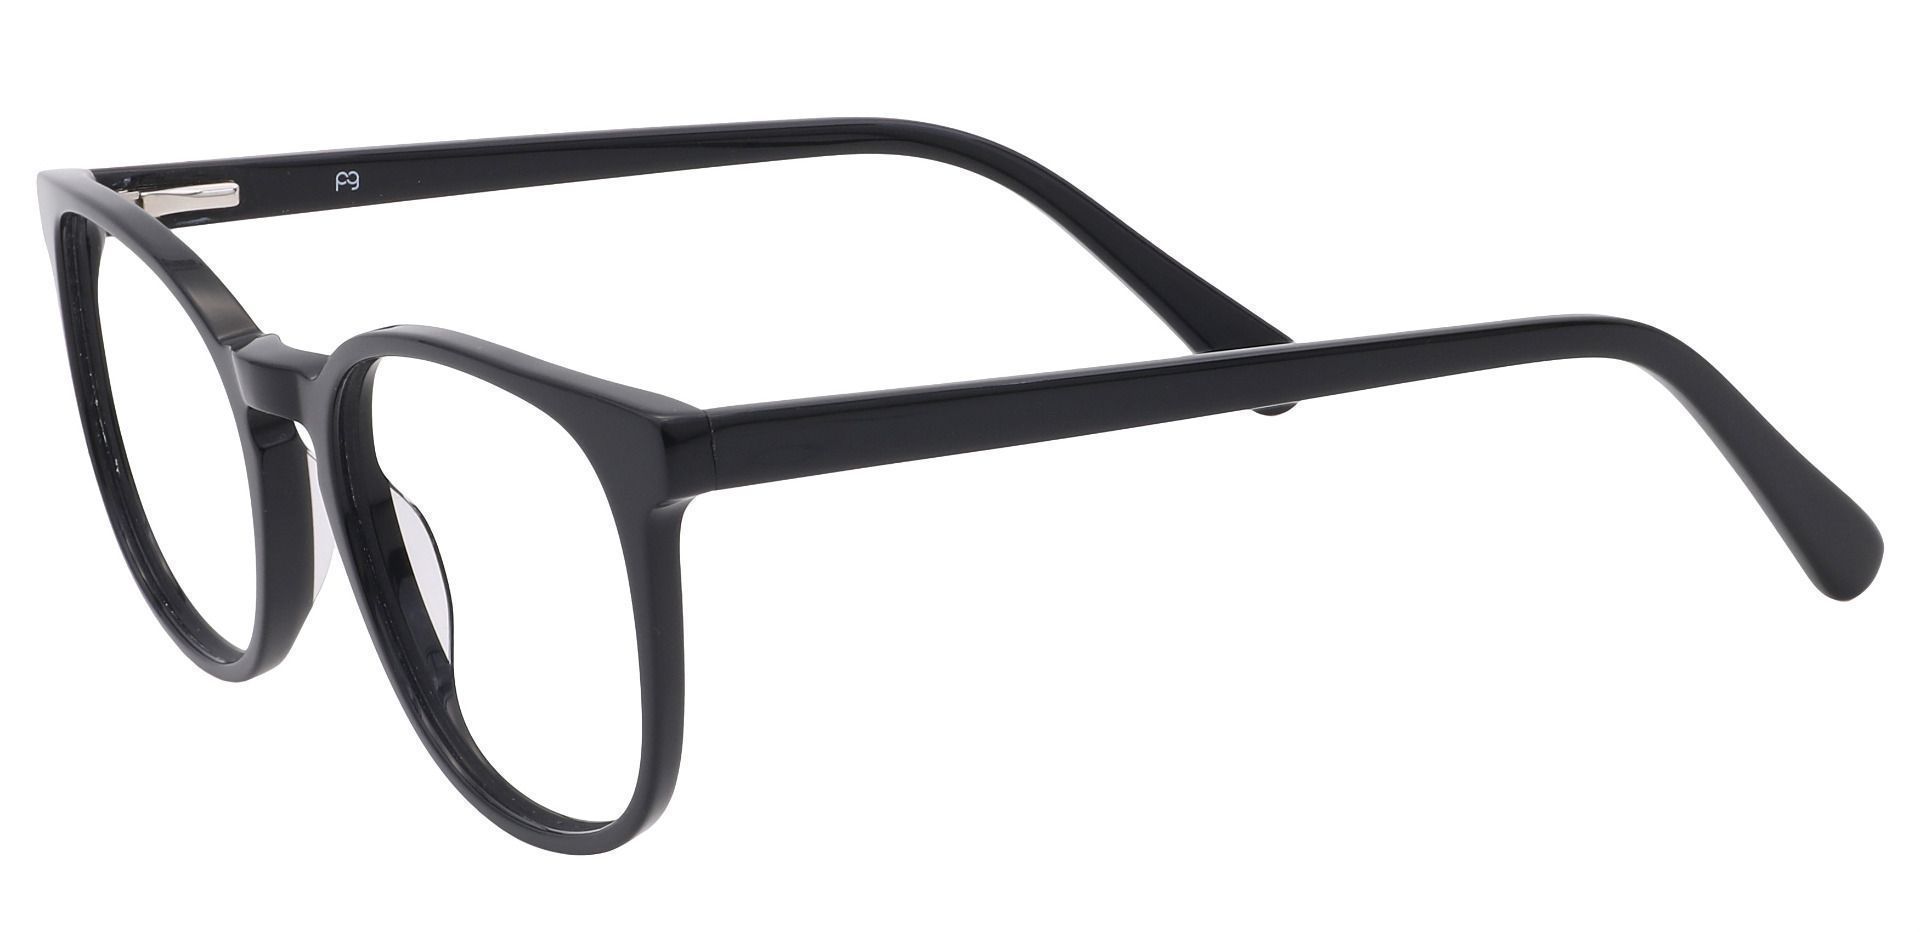 Nebula Round Lined Bifocal Glasses - Black